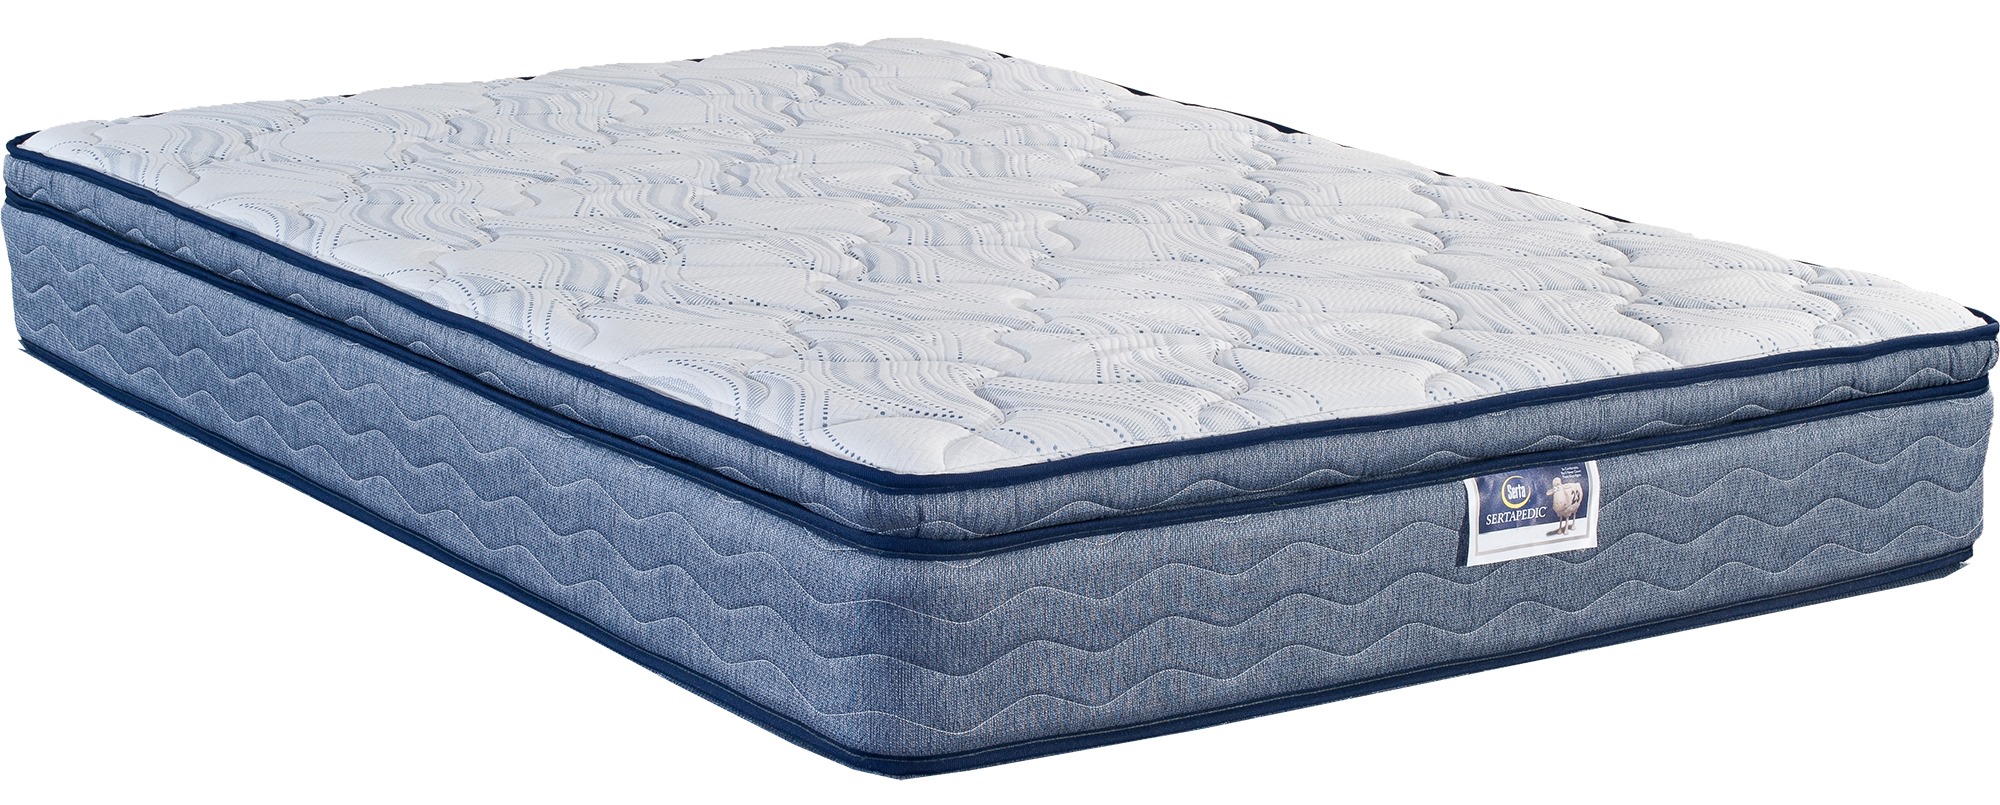 serta sleeptrue hybrid 13 euro top king mattress